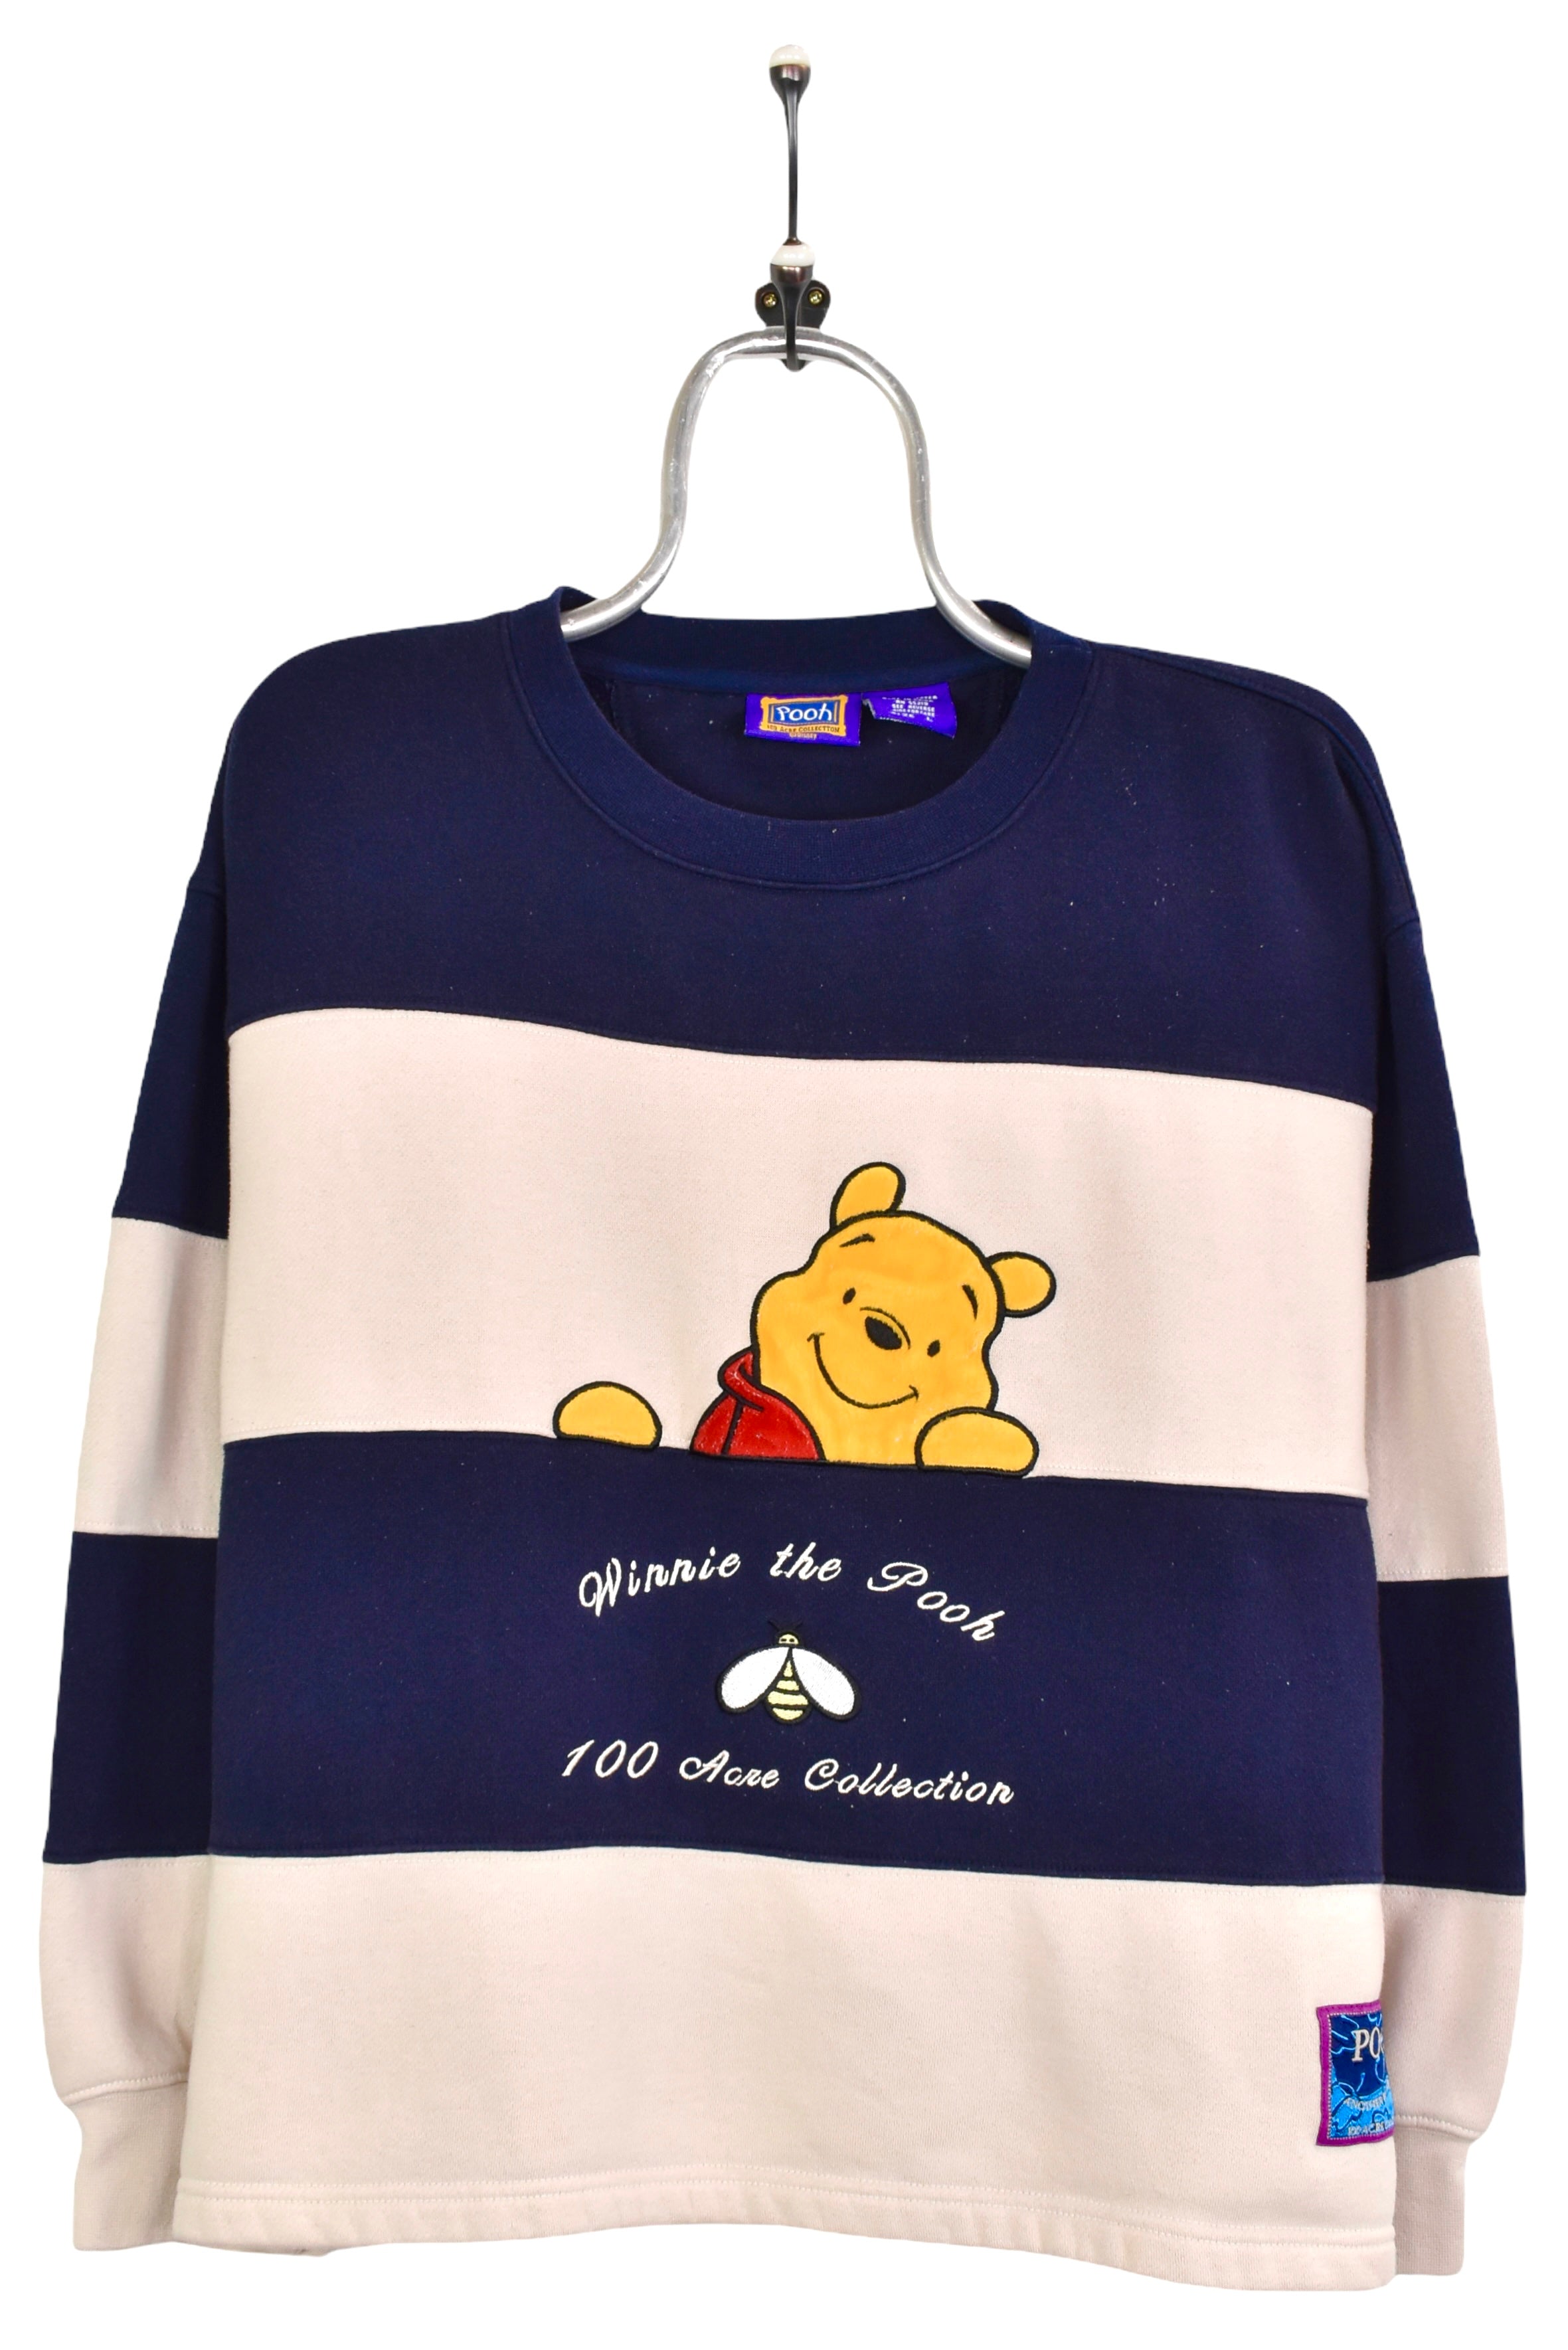 Vintage Women's Disney Pooh embroidered striped sweatshirt | Large DISNEY / CARTOON